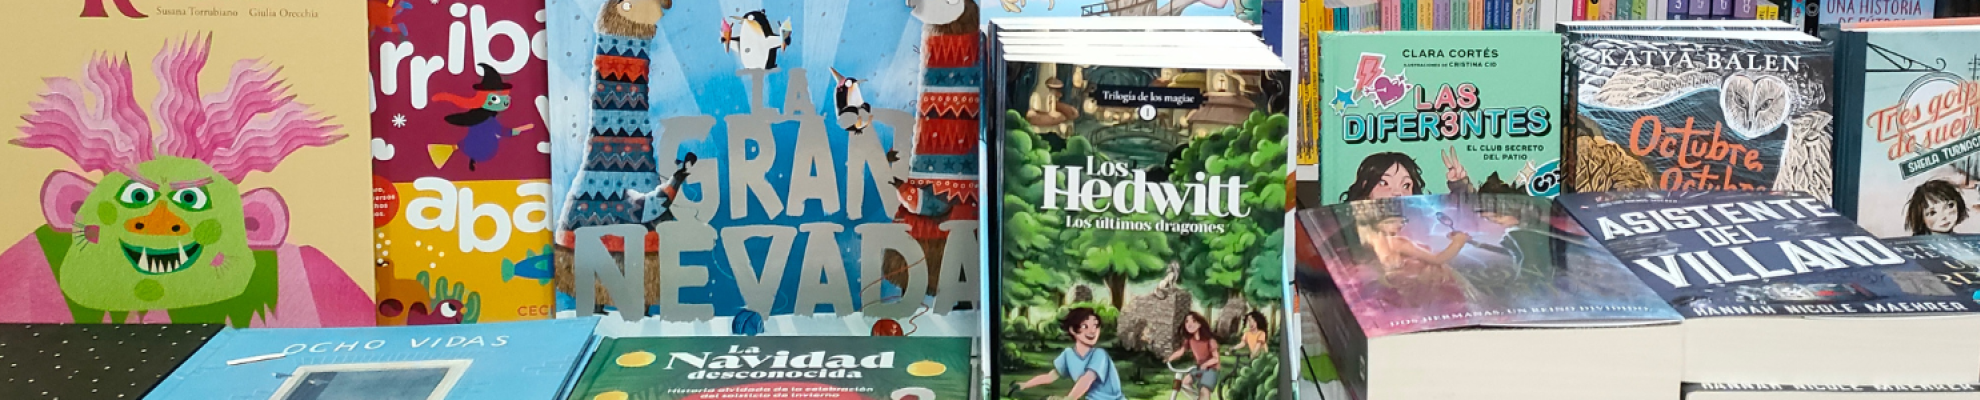 Libreria Serendipias - Los Hedwitt